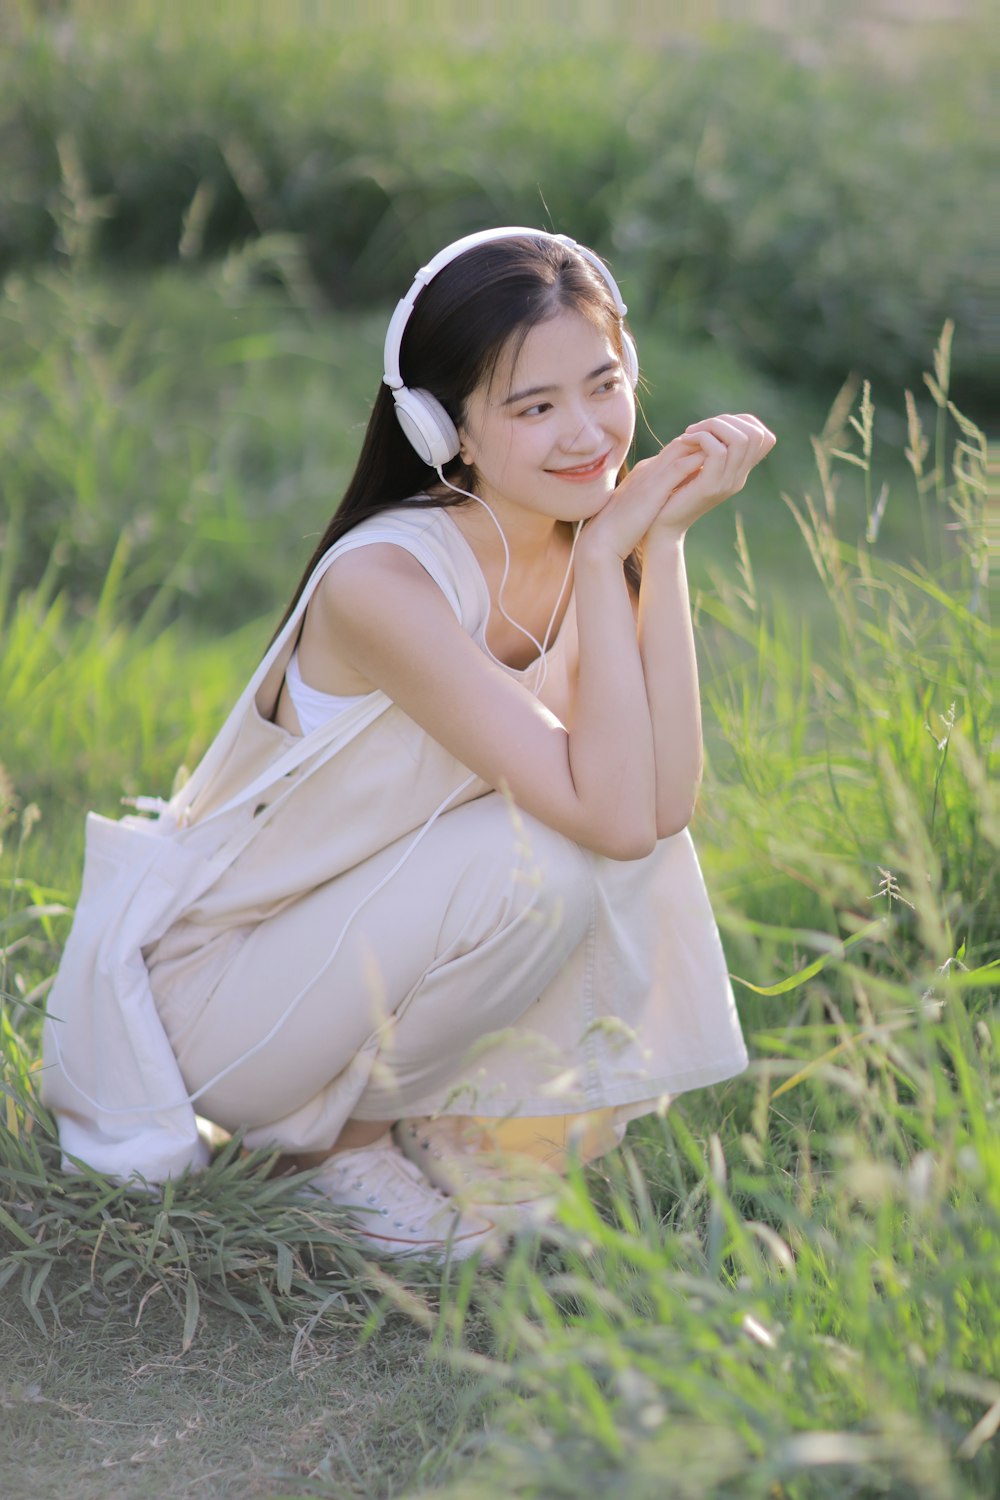 woman in white dress sitting on grass field